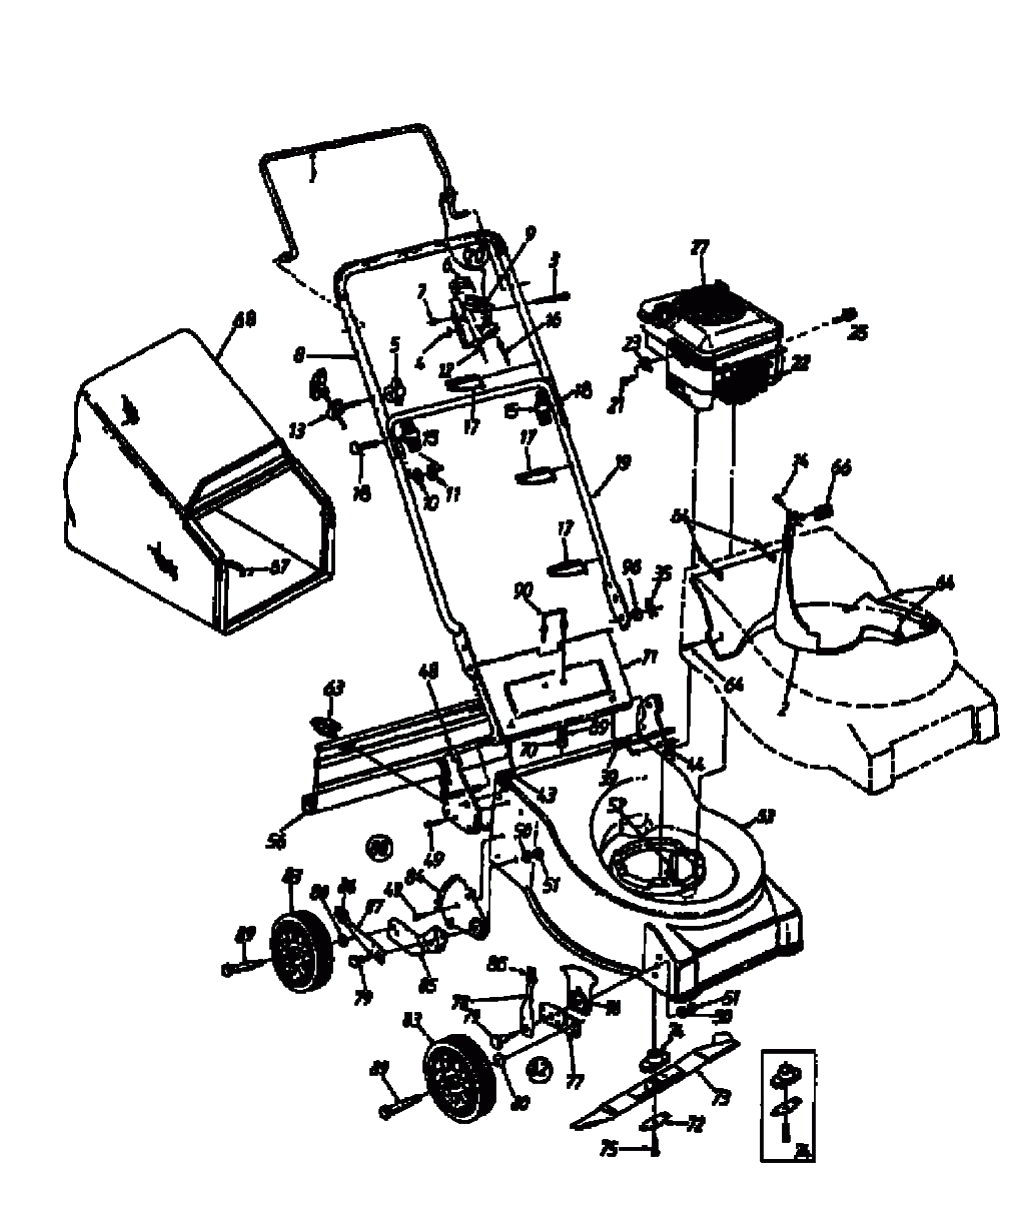 MTD Артикул 11A-660A678 (год выпуска 1998). Основная деталировка